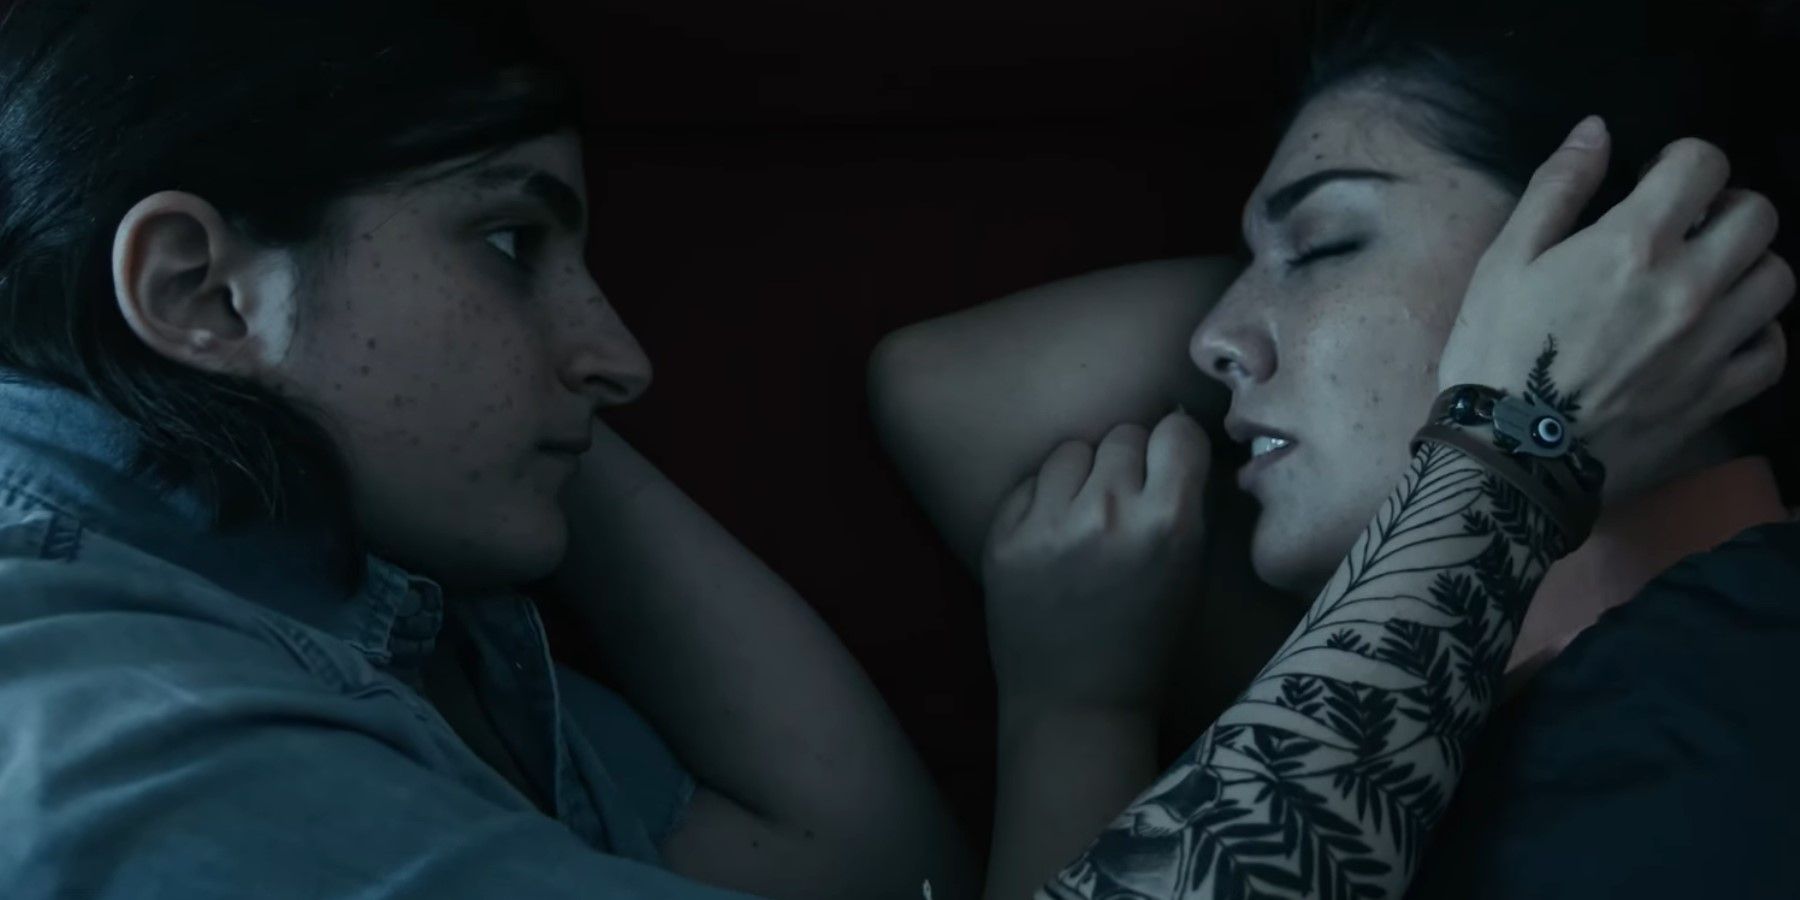 The Last of Us 2 Fan Film Cast Talks LGBTQ Representation and Relationships